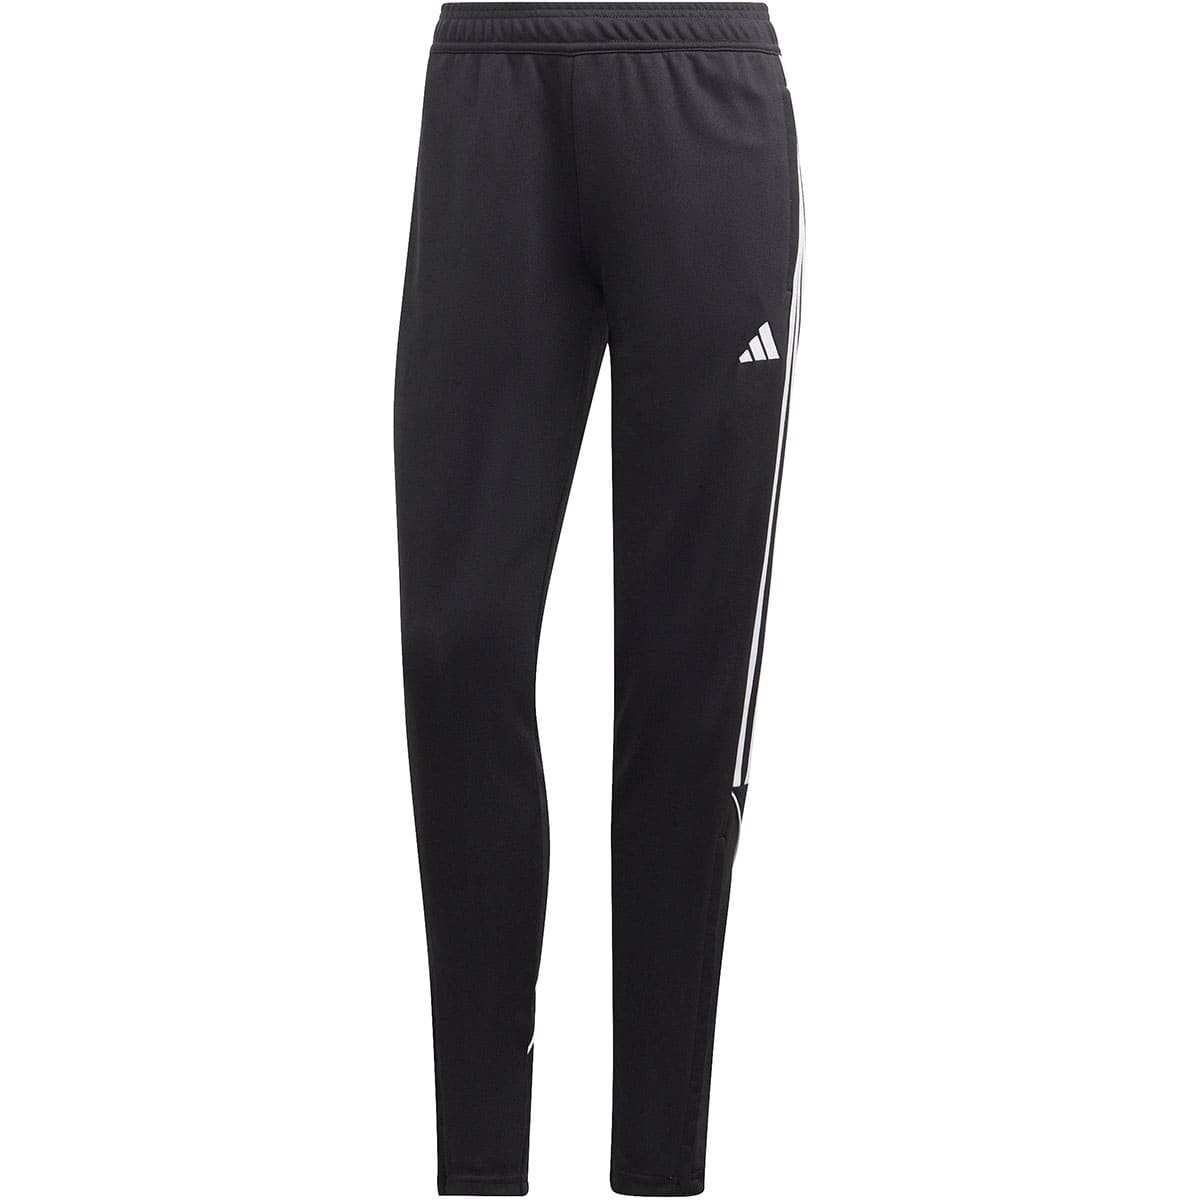 Adidas Damen Trainingshose Tiro 23 schwarz-weiß